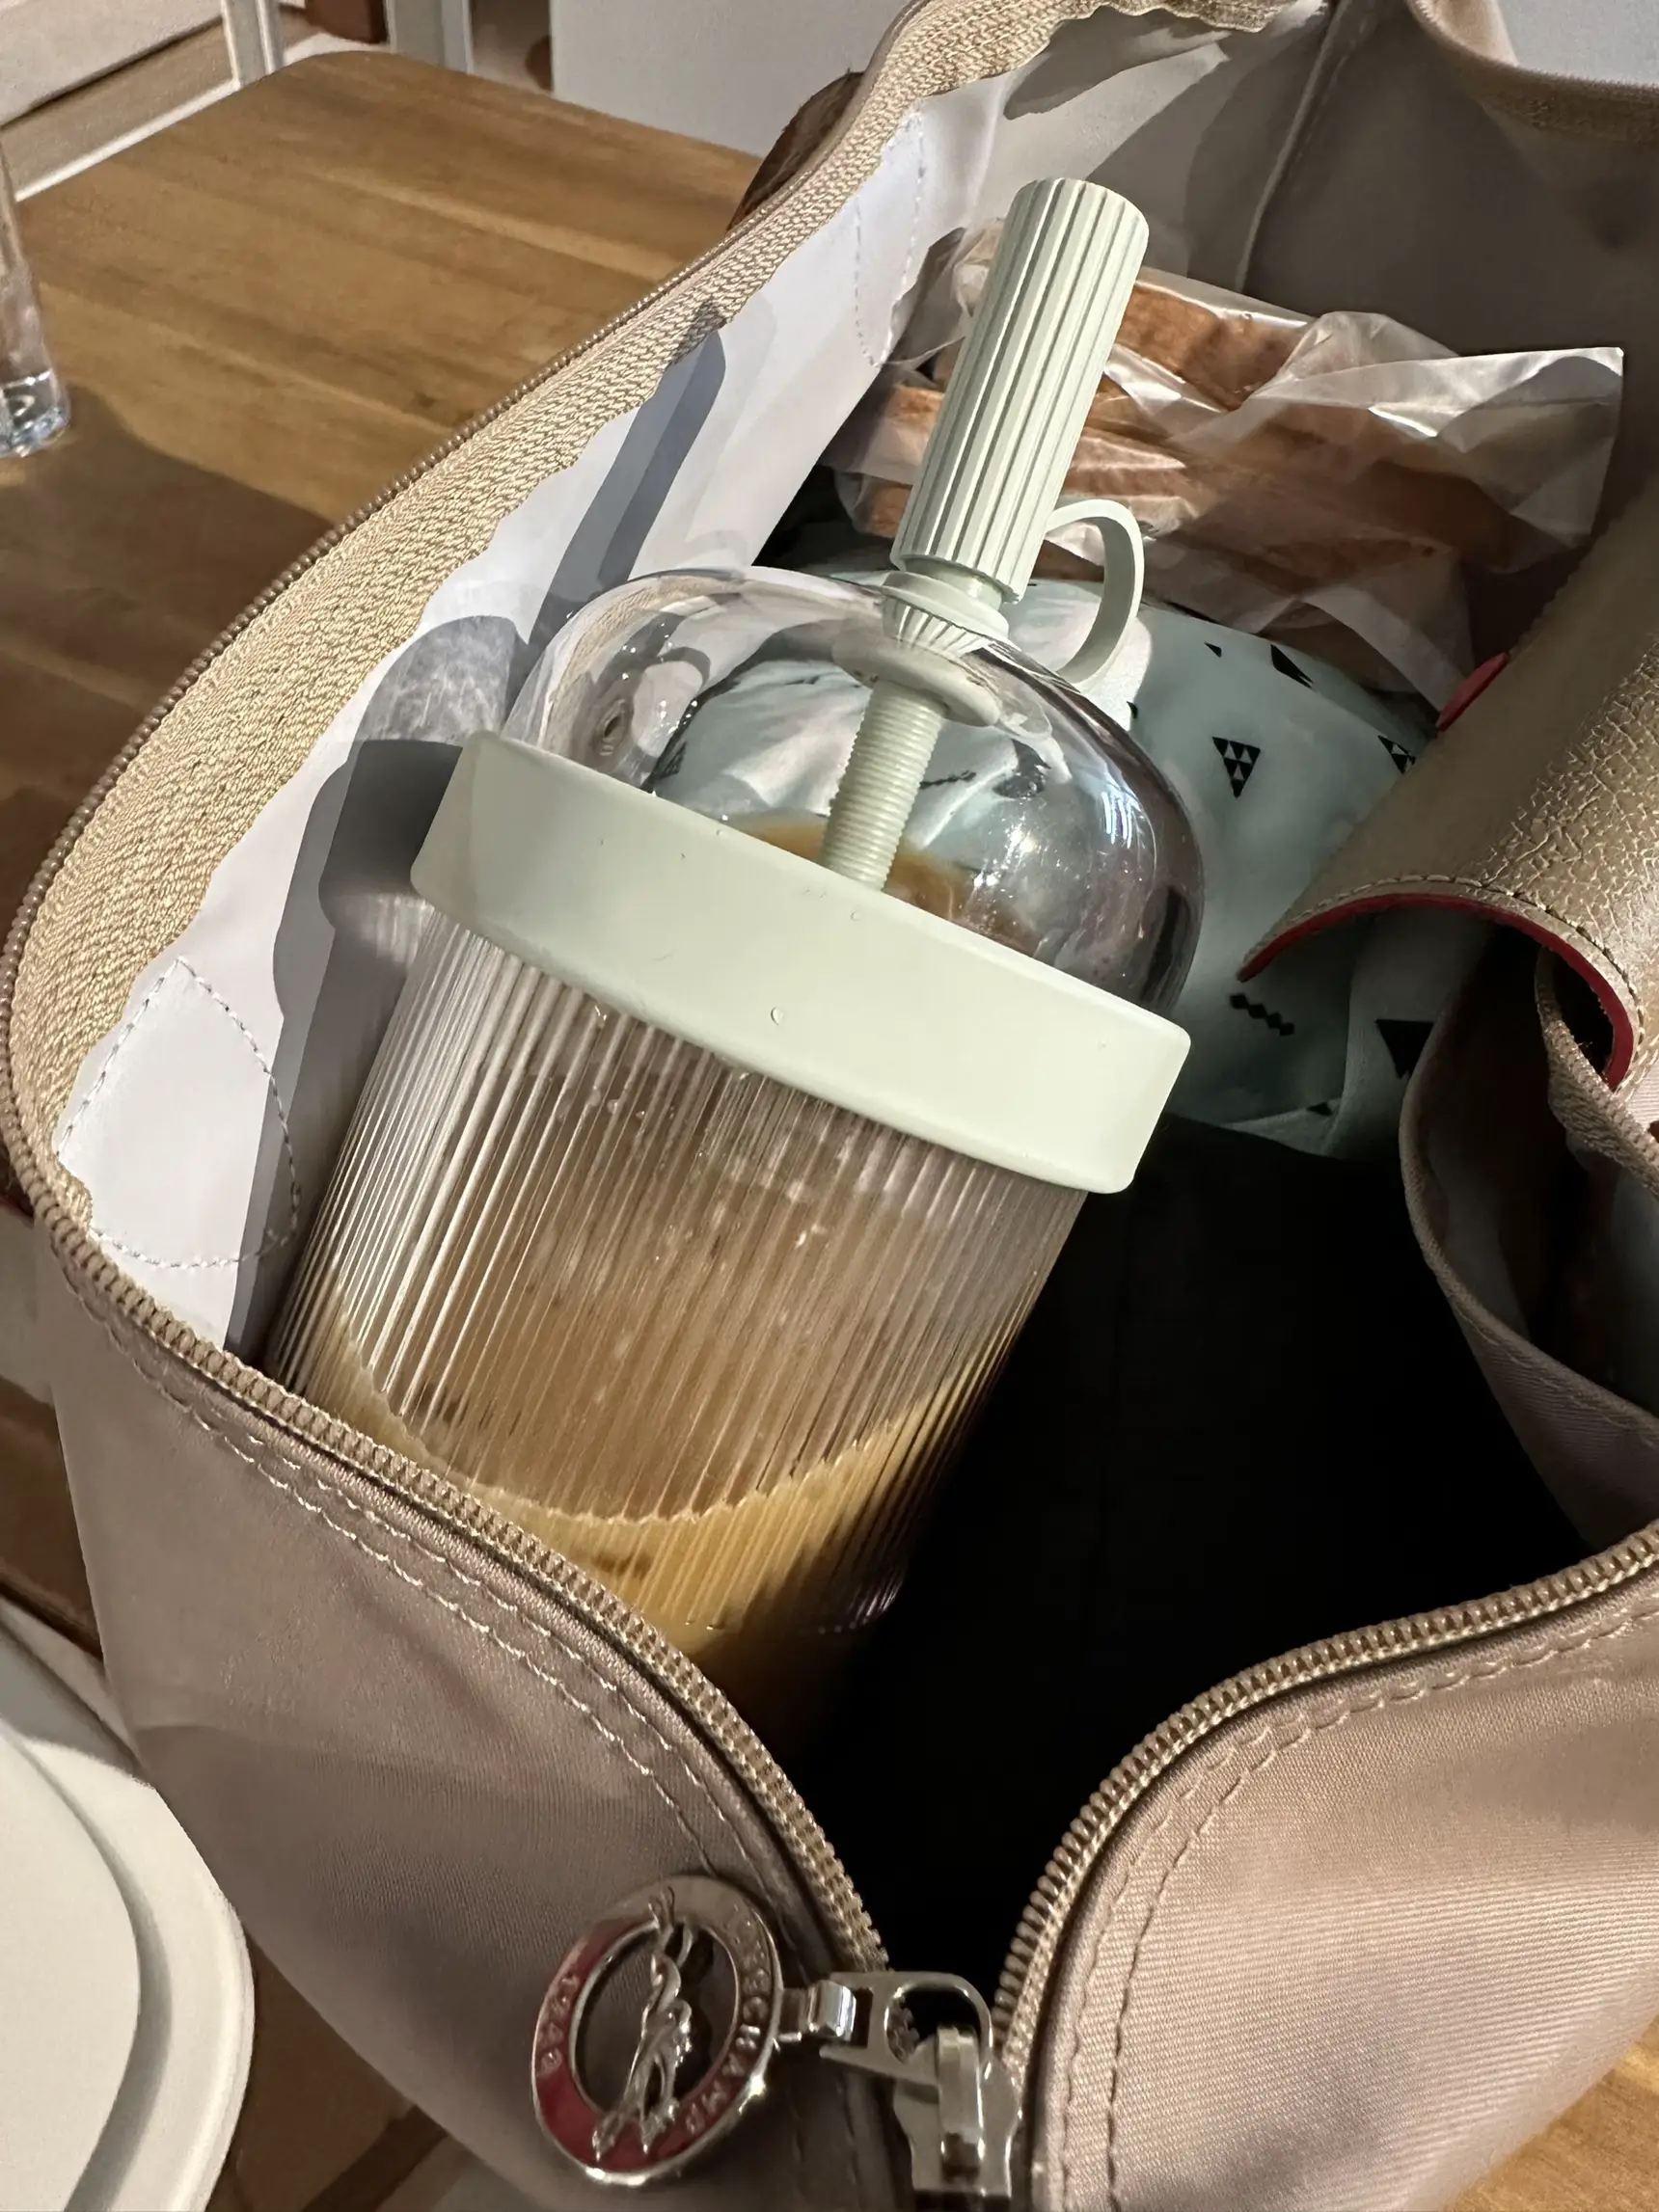 Lululemon Reusable Shopping Bag Features one snap - Depop